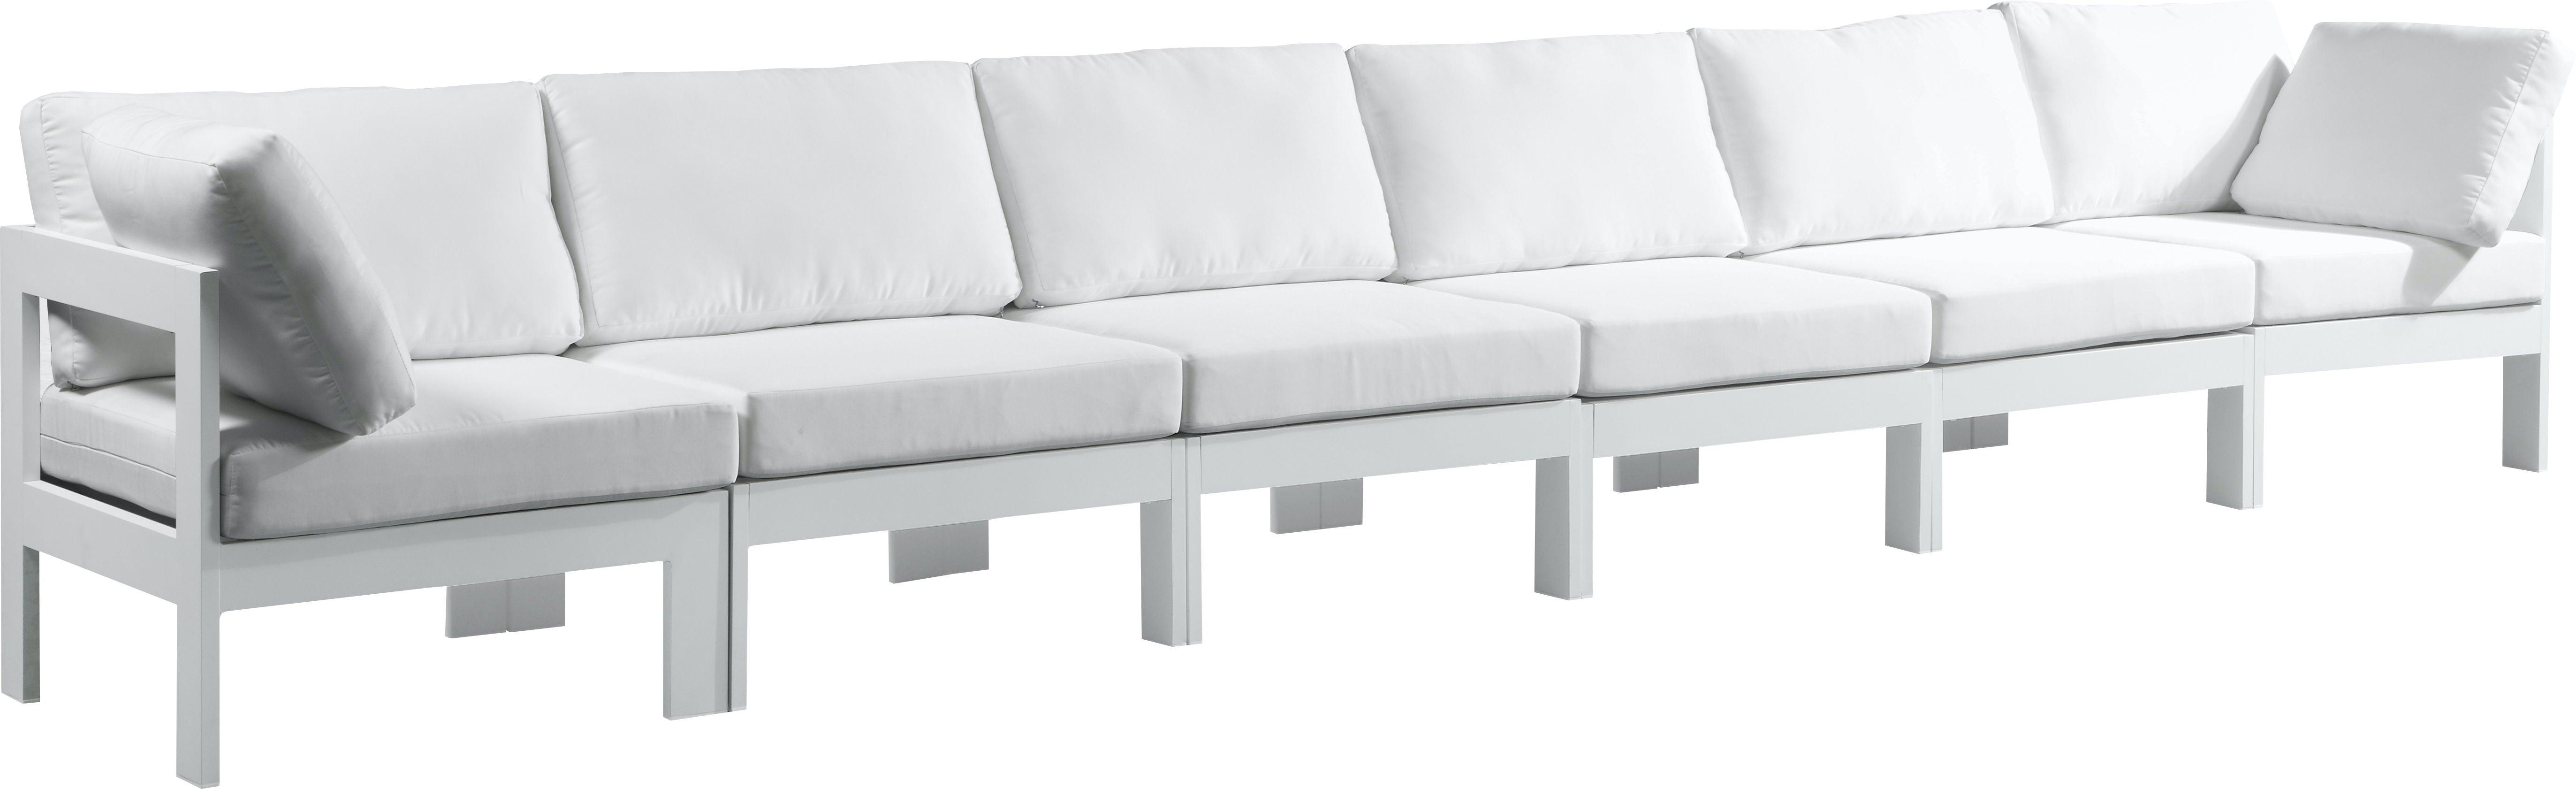 Meridian Furniture - Nizuc - Outdoor Patio Modular Sofa With Frame - White - With Frame - 5th Avenue Furniture